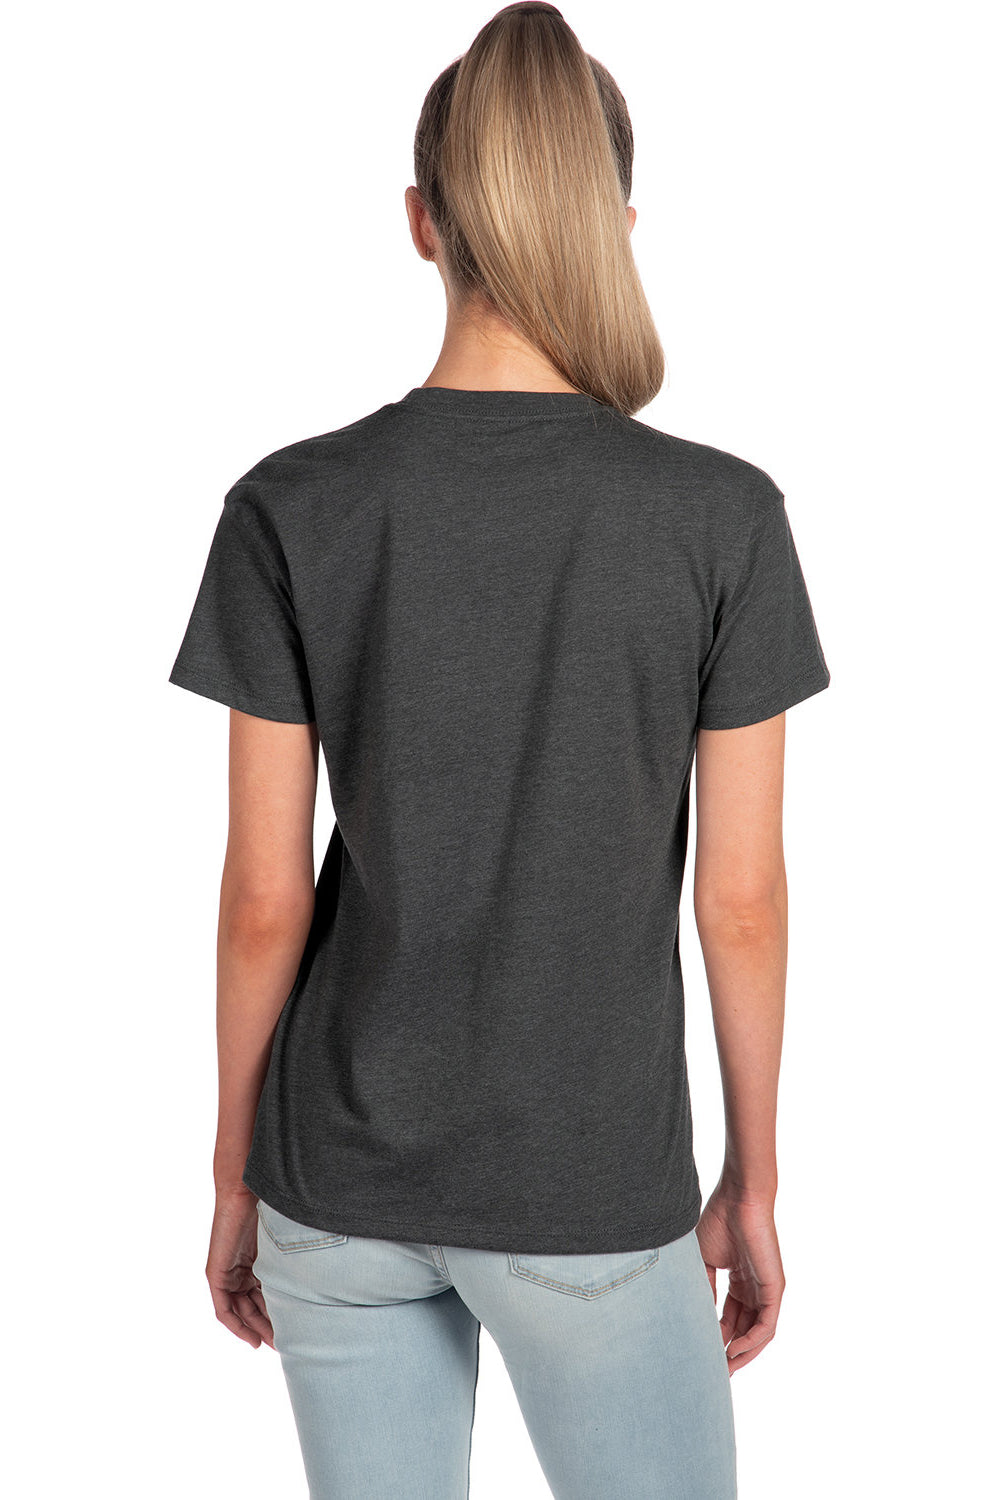 Next Level 6600 Womens Relaxed CVC Short Sleeve Crewneck T-Shirt Charcoal Grey Back